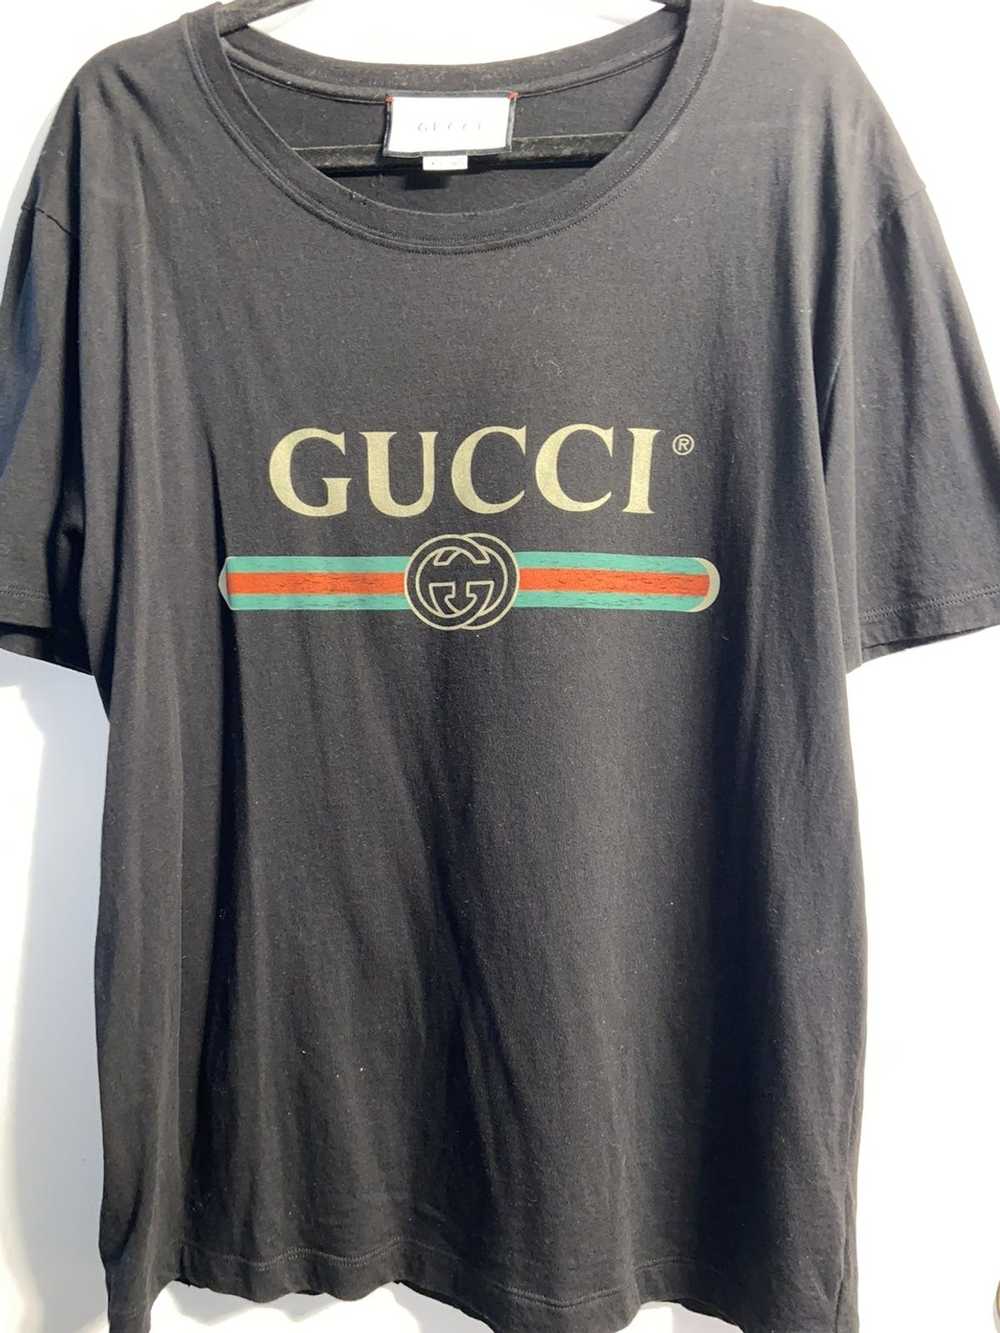 Gucci Gucci shirt - image 1